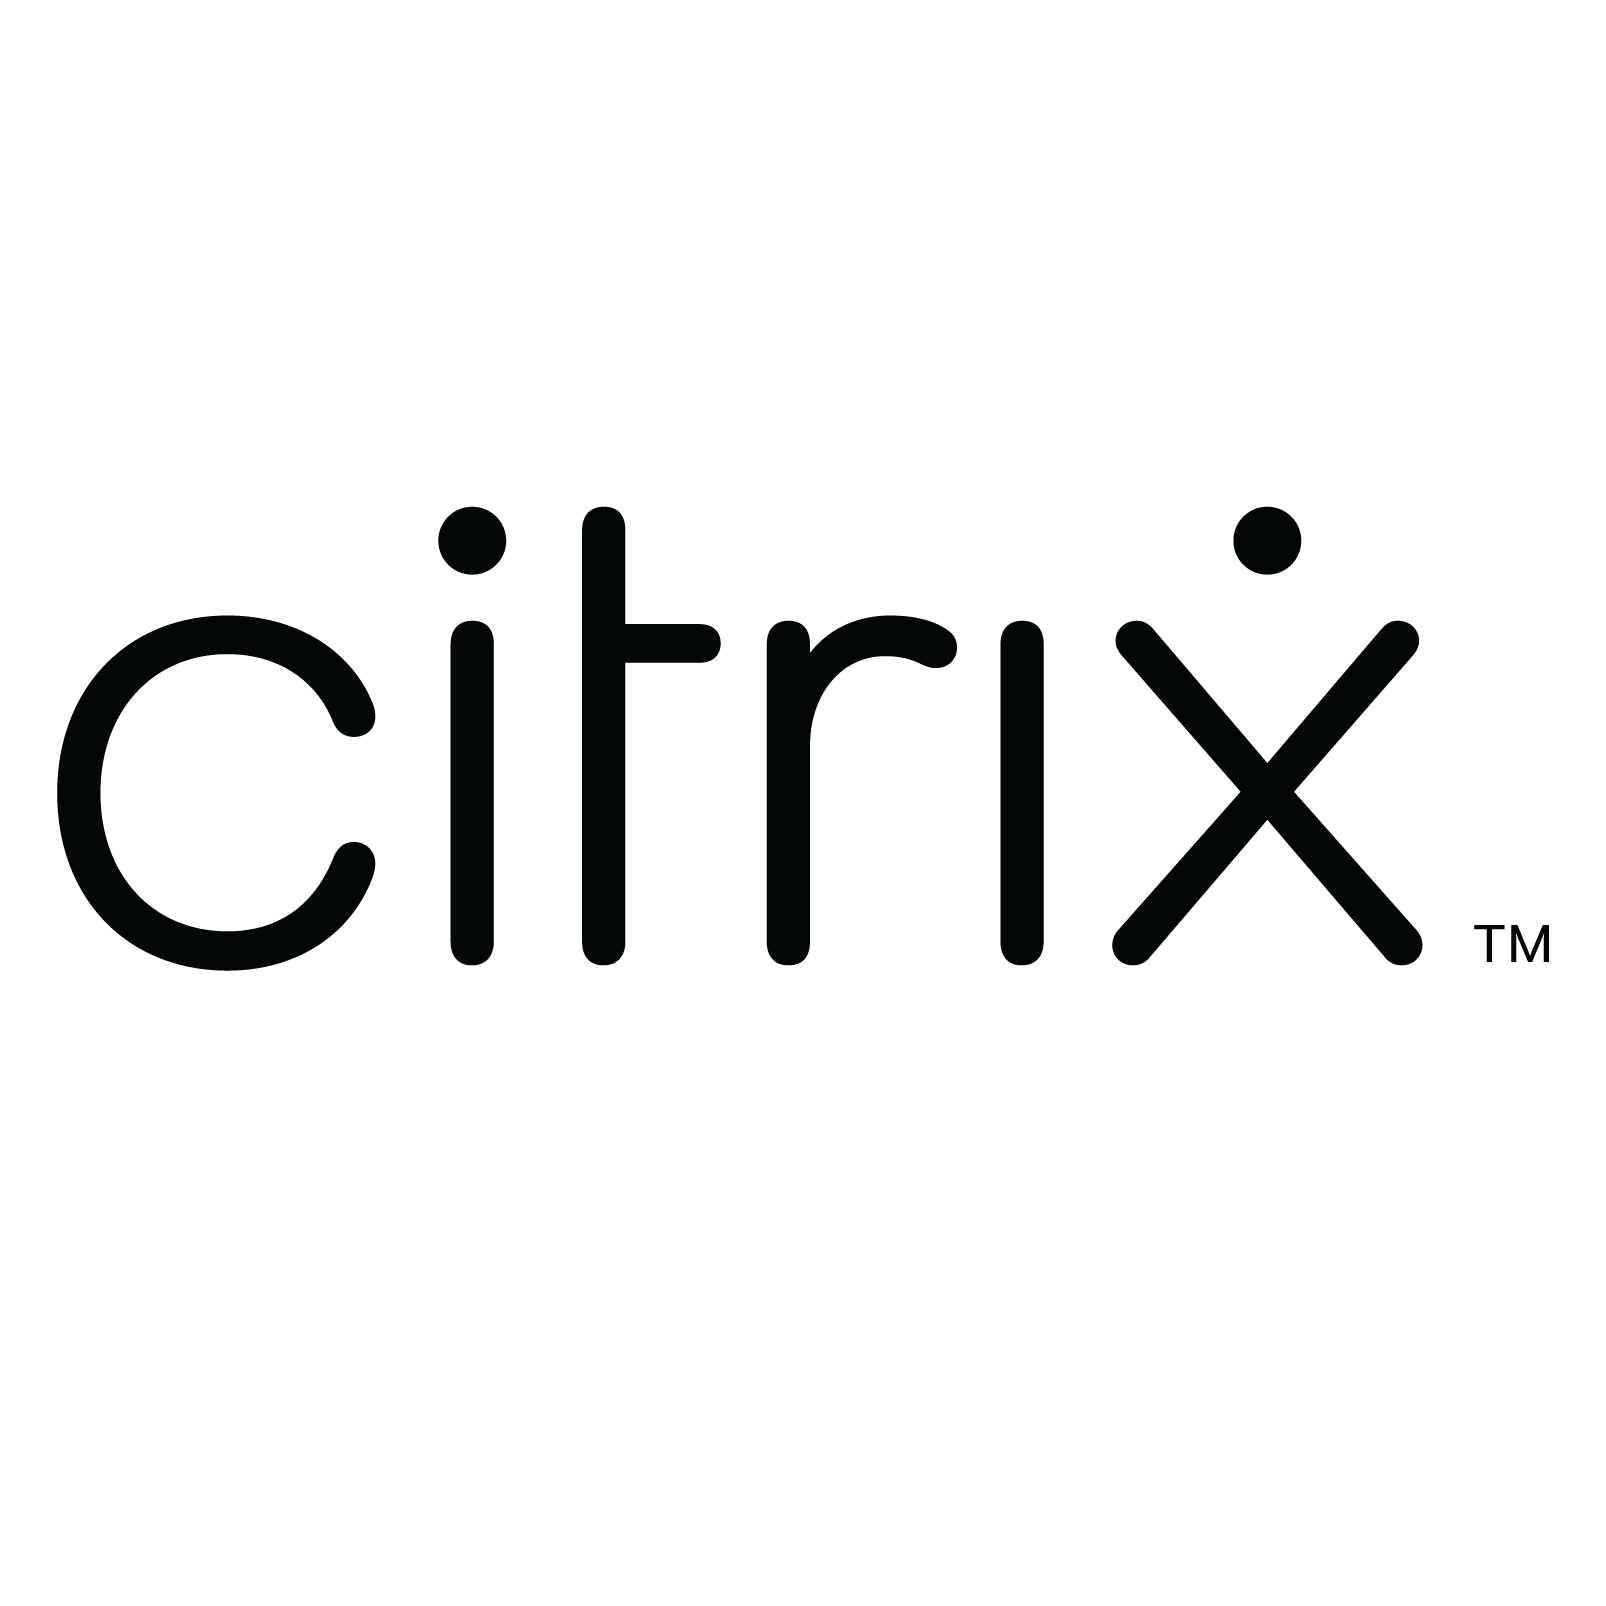 citrix-logo-black-01.png